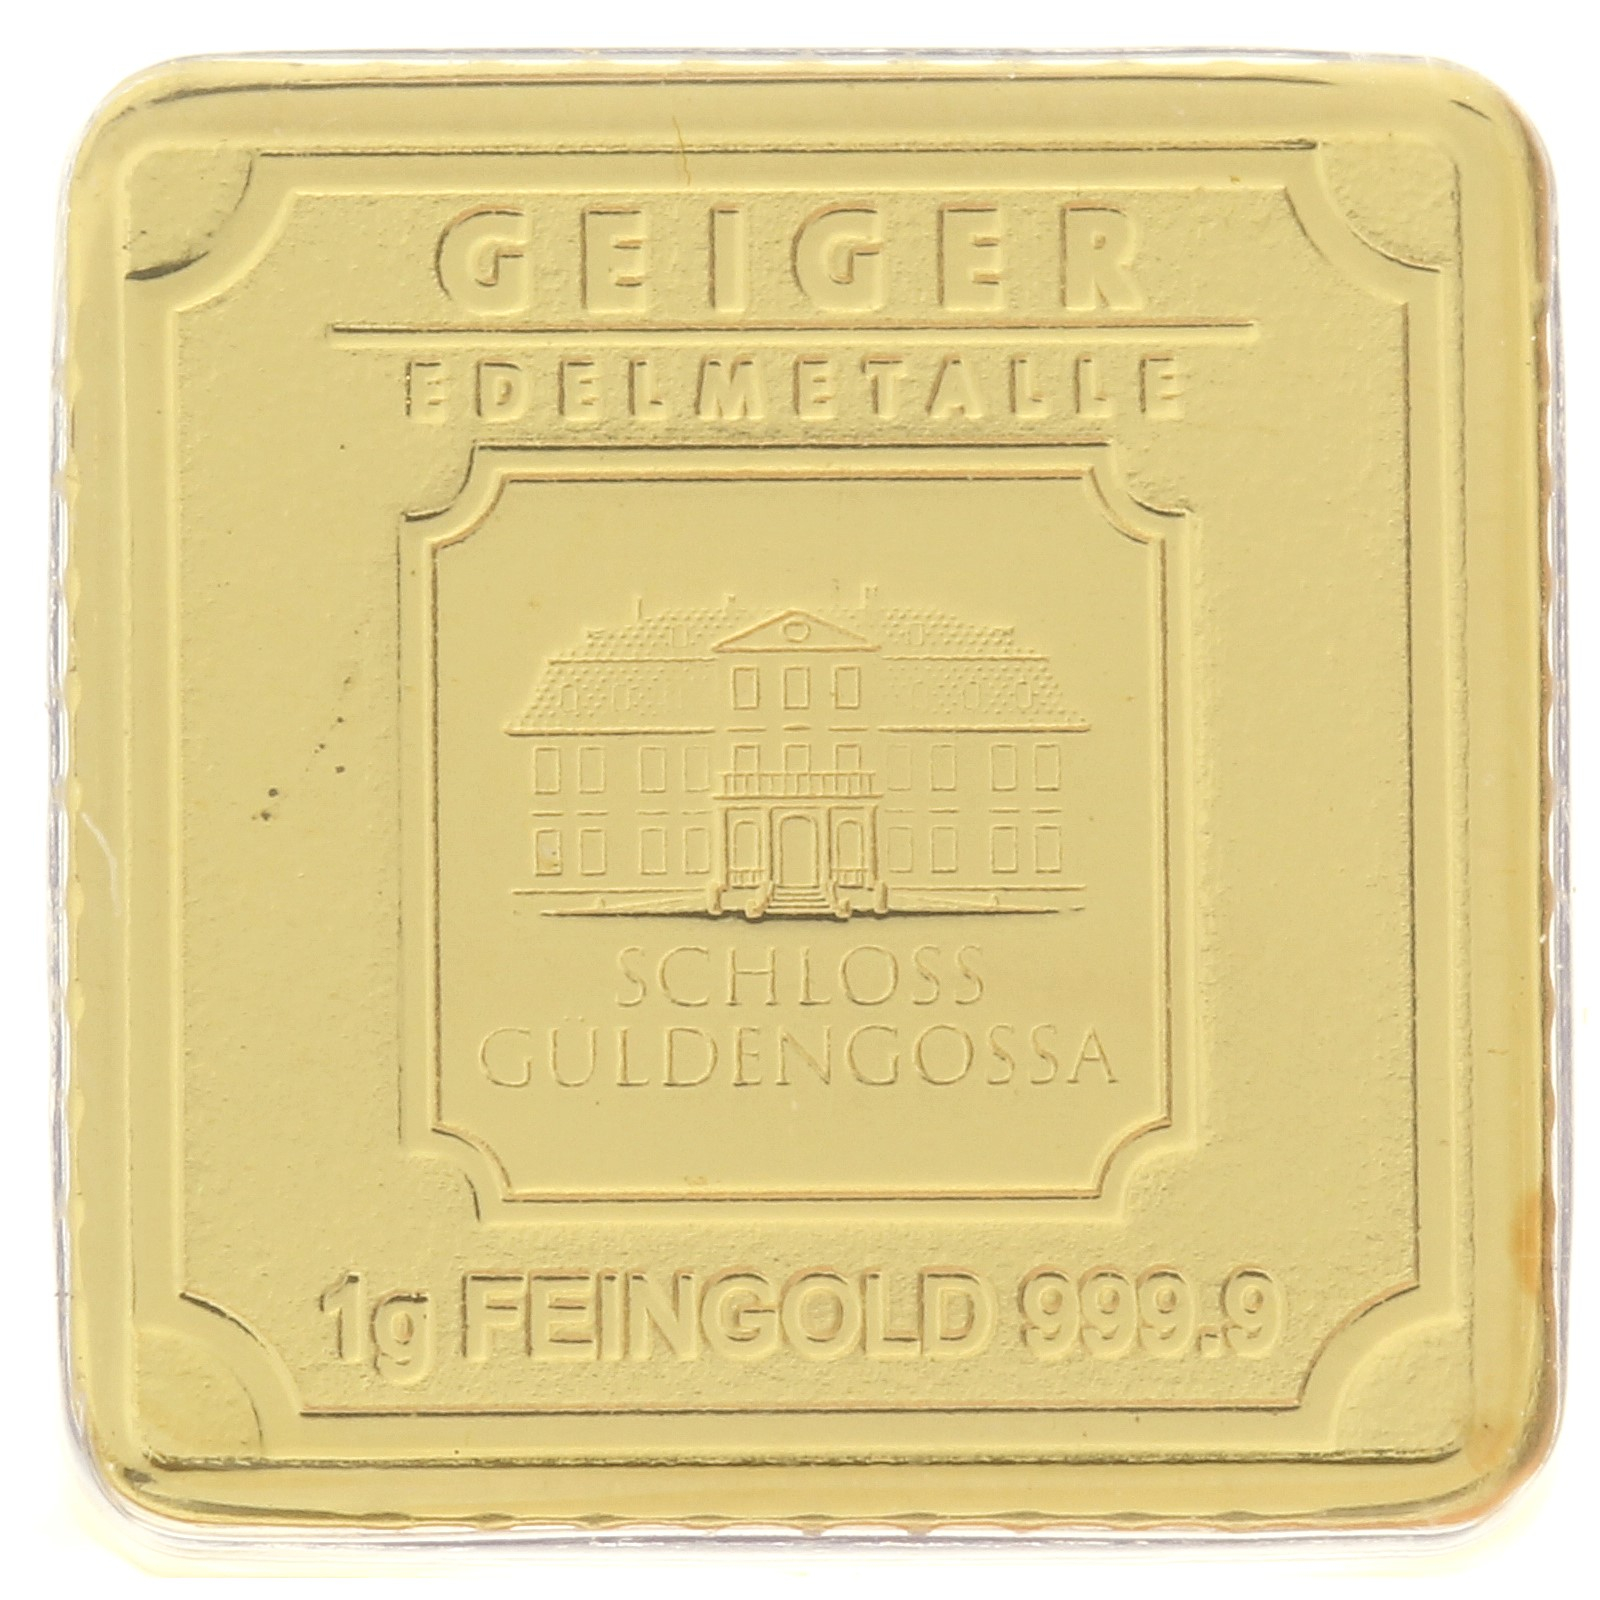 Geiger Edelmetalle - 1 gram - fine gold - Schloss Guldenhgossa 